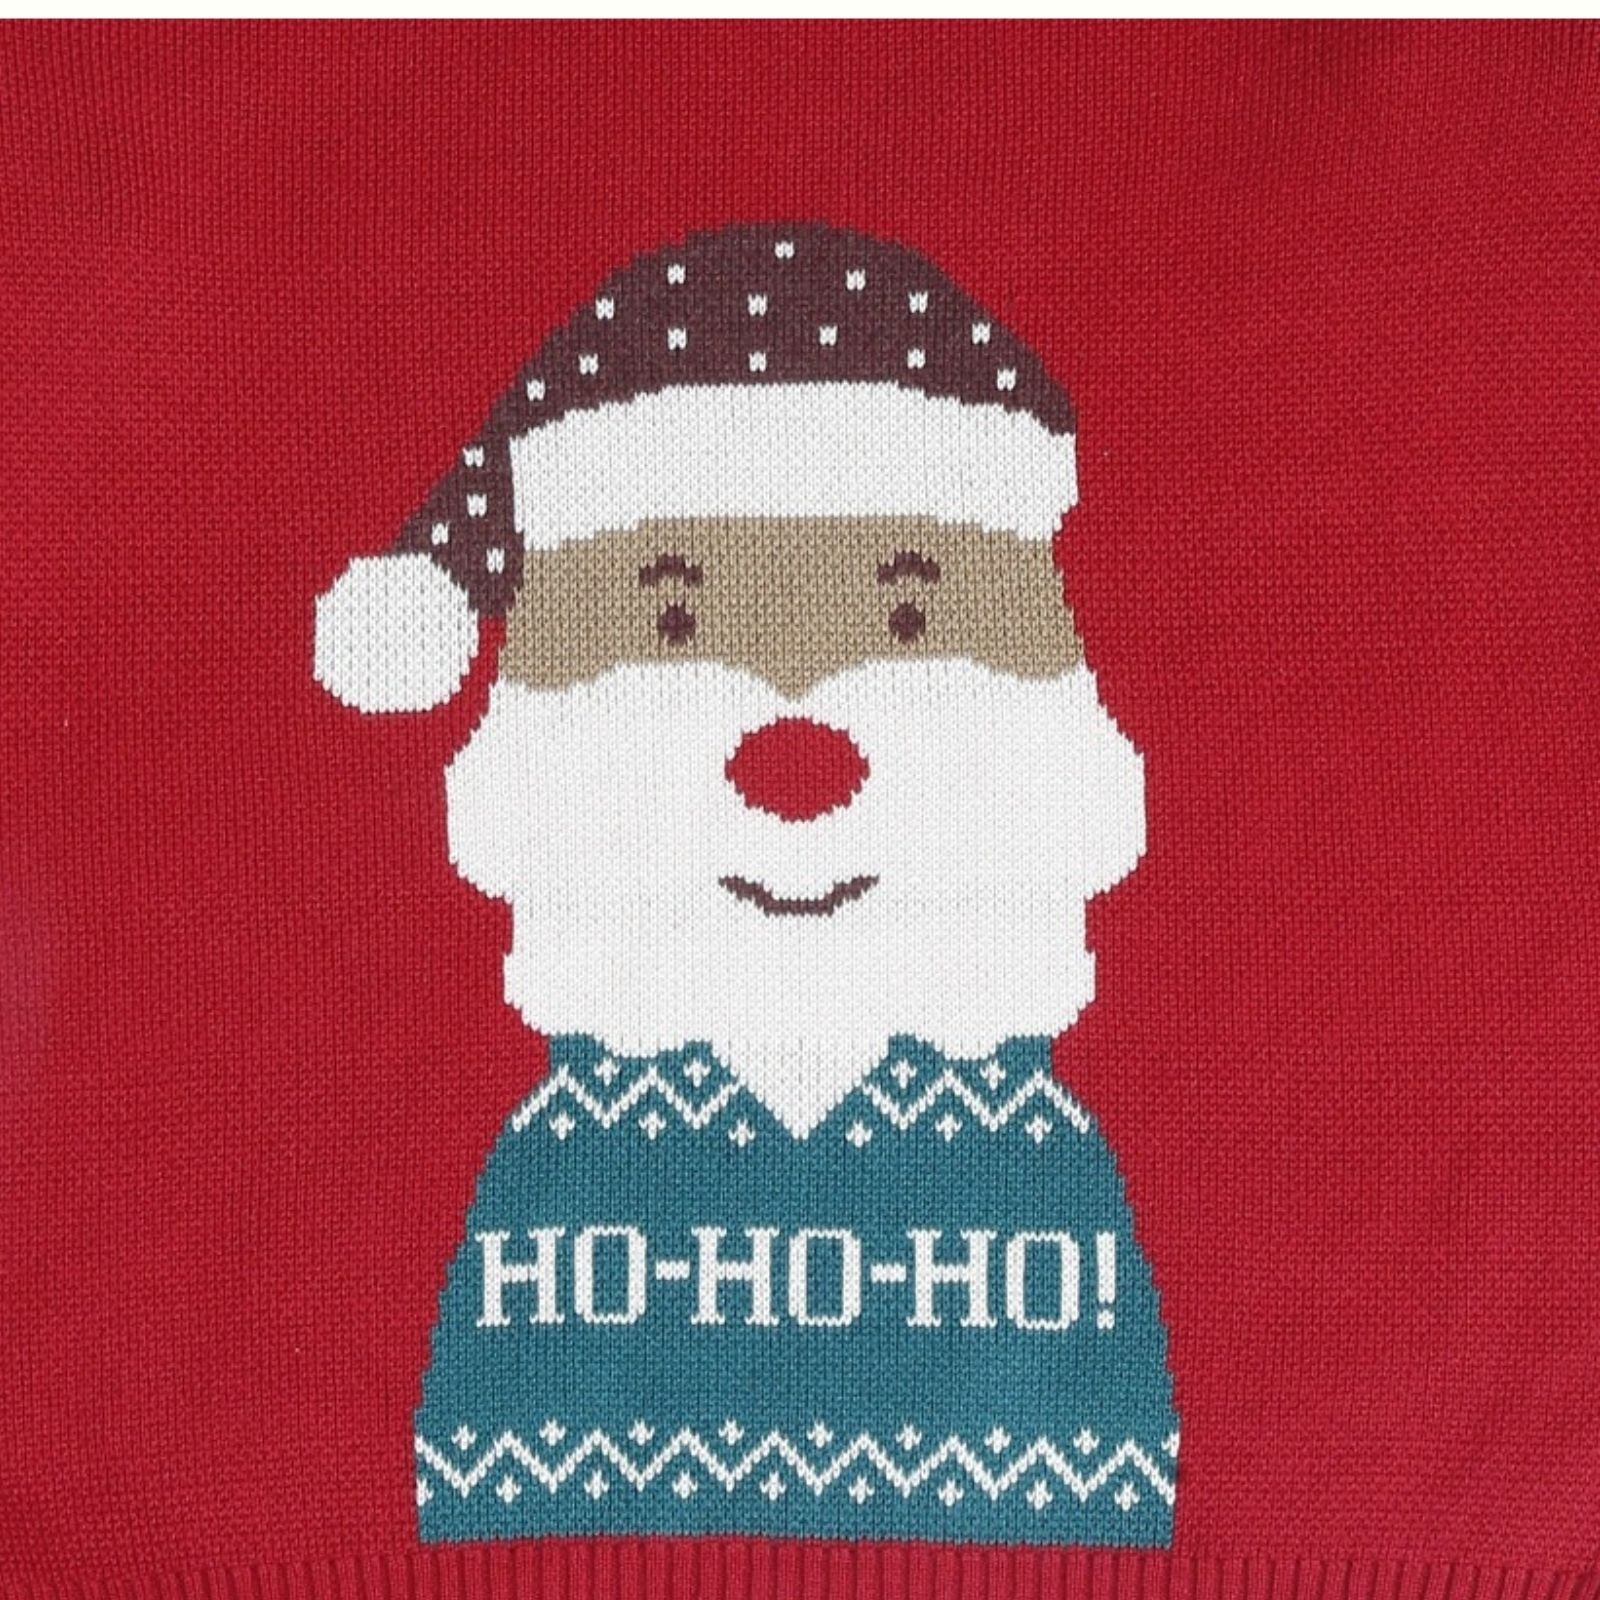 Greendeer Santa & Joyful Reindeer 100% Cotton Sweater with Lower Set of 3